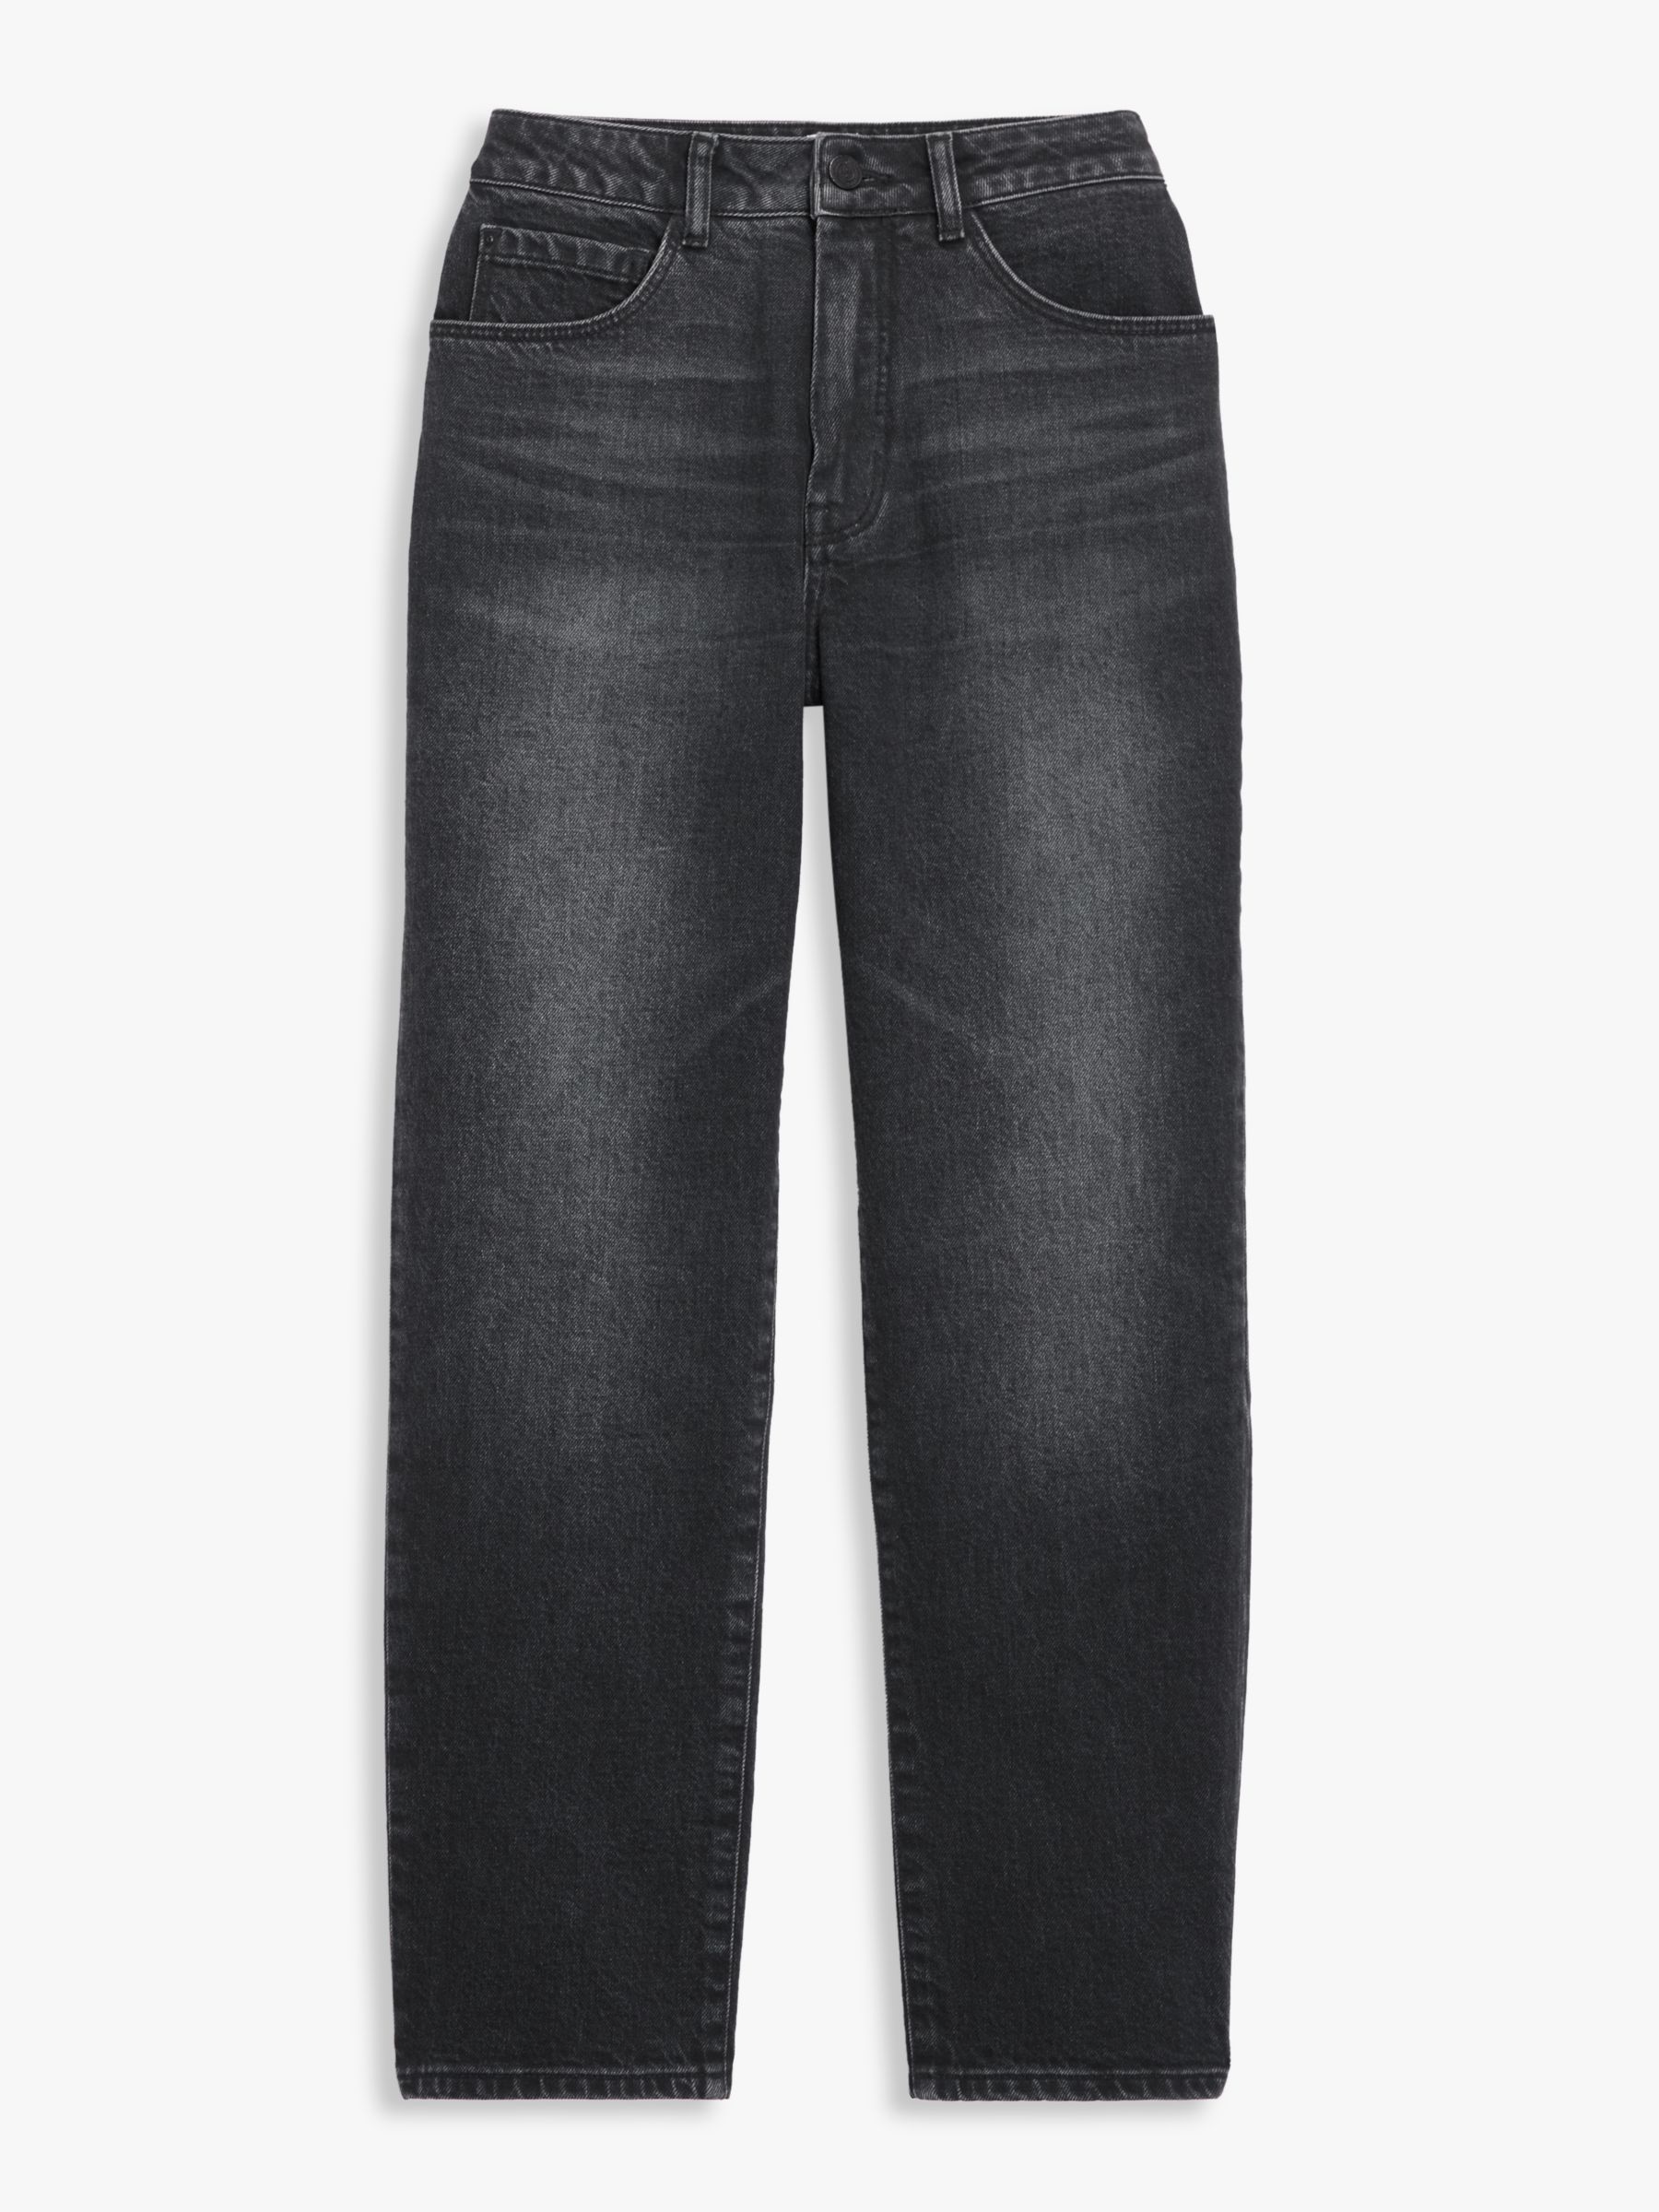 John Lewis Premium Authentic Straight Leg Jeans, Black Wash, 8